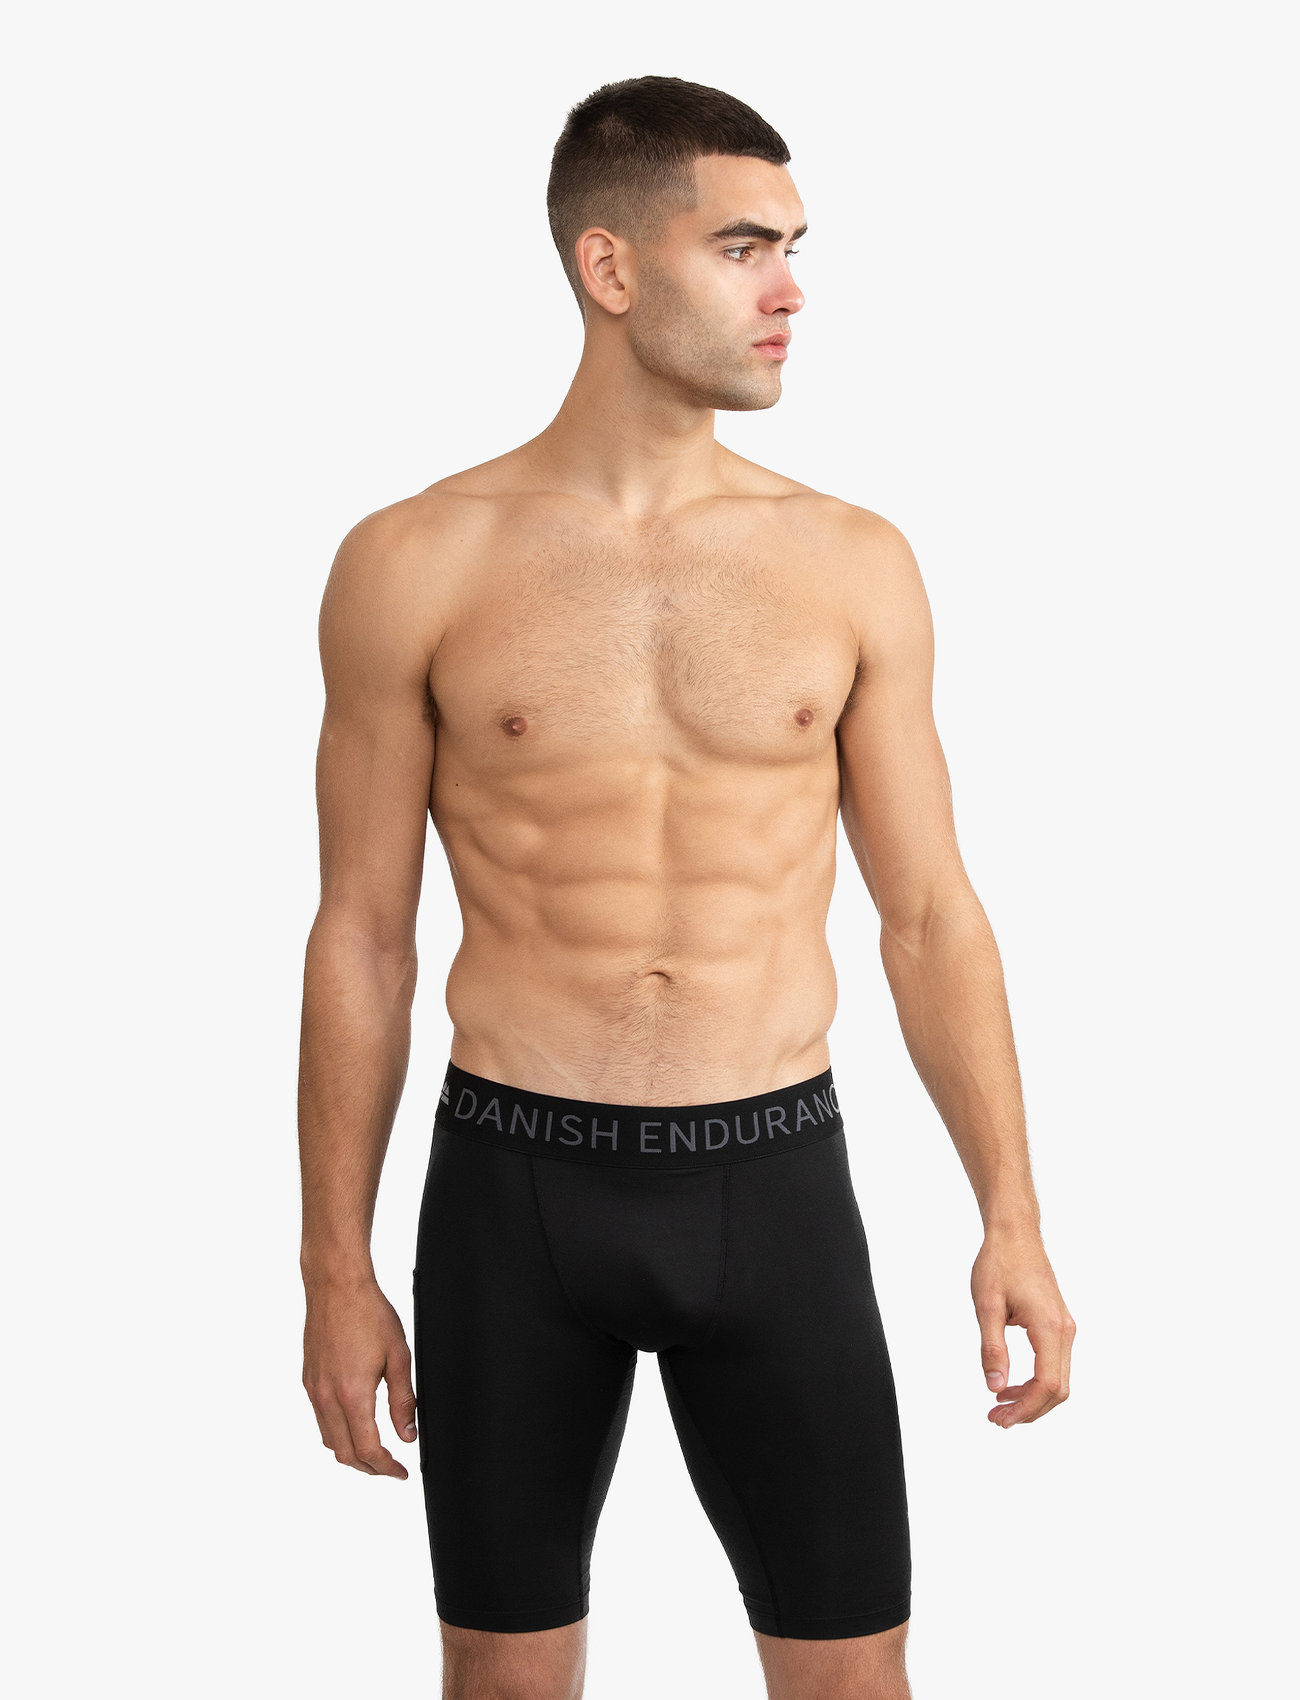 Danish Endurance - Men's Compression Shorts 2-pack - lowest prices - multicolor (1x black, 1x grey) - 1